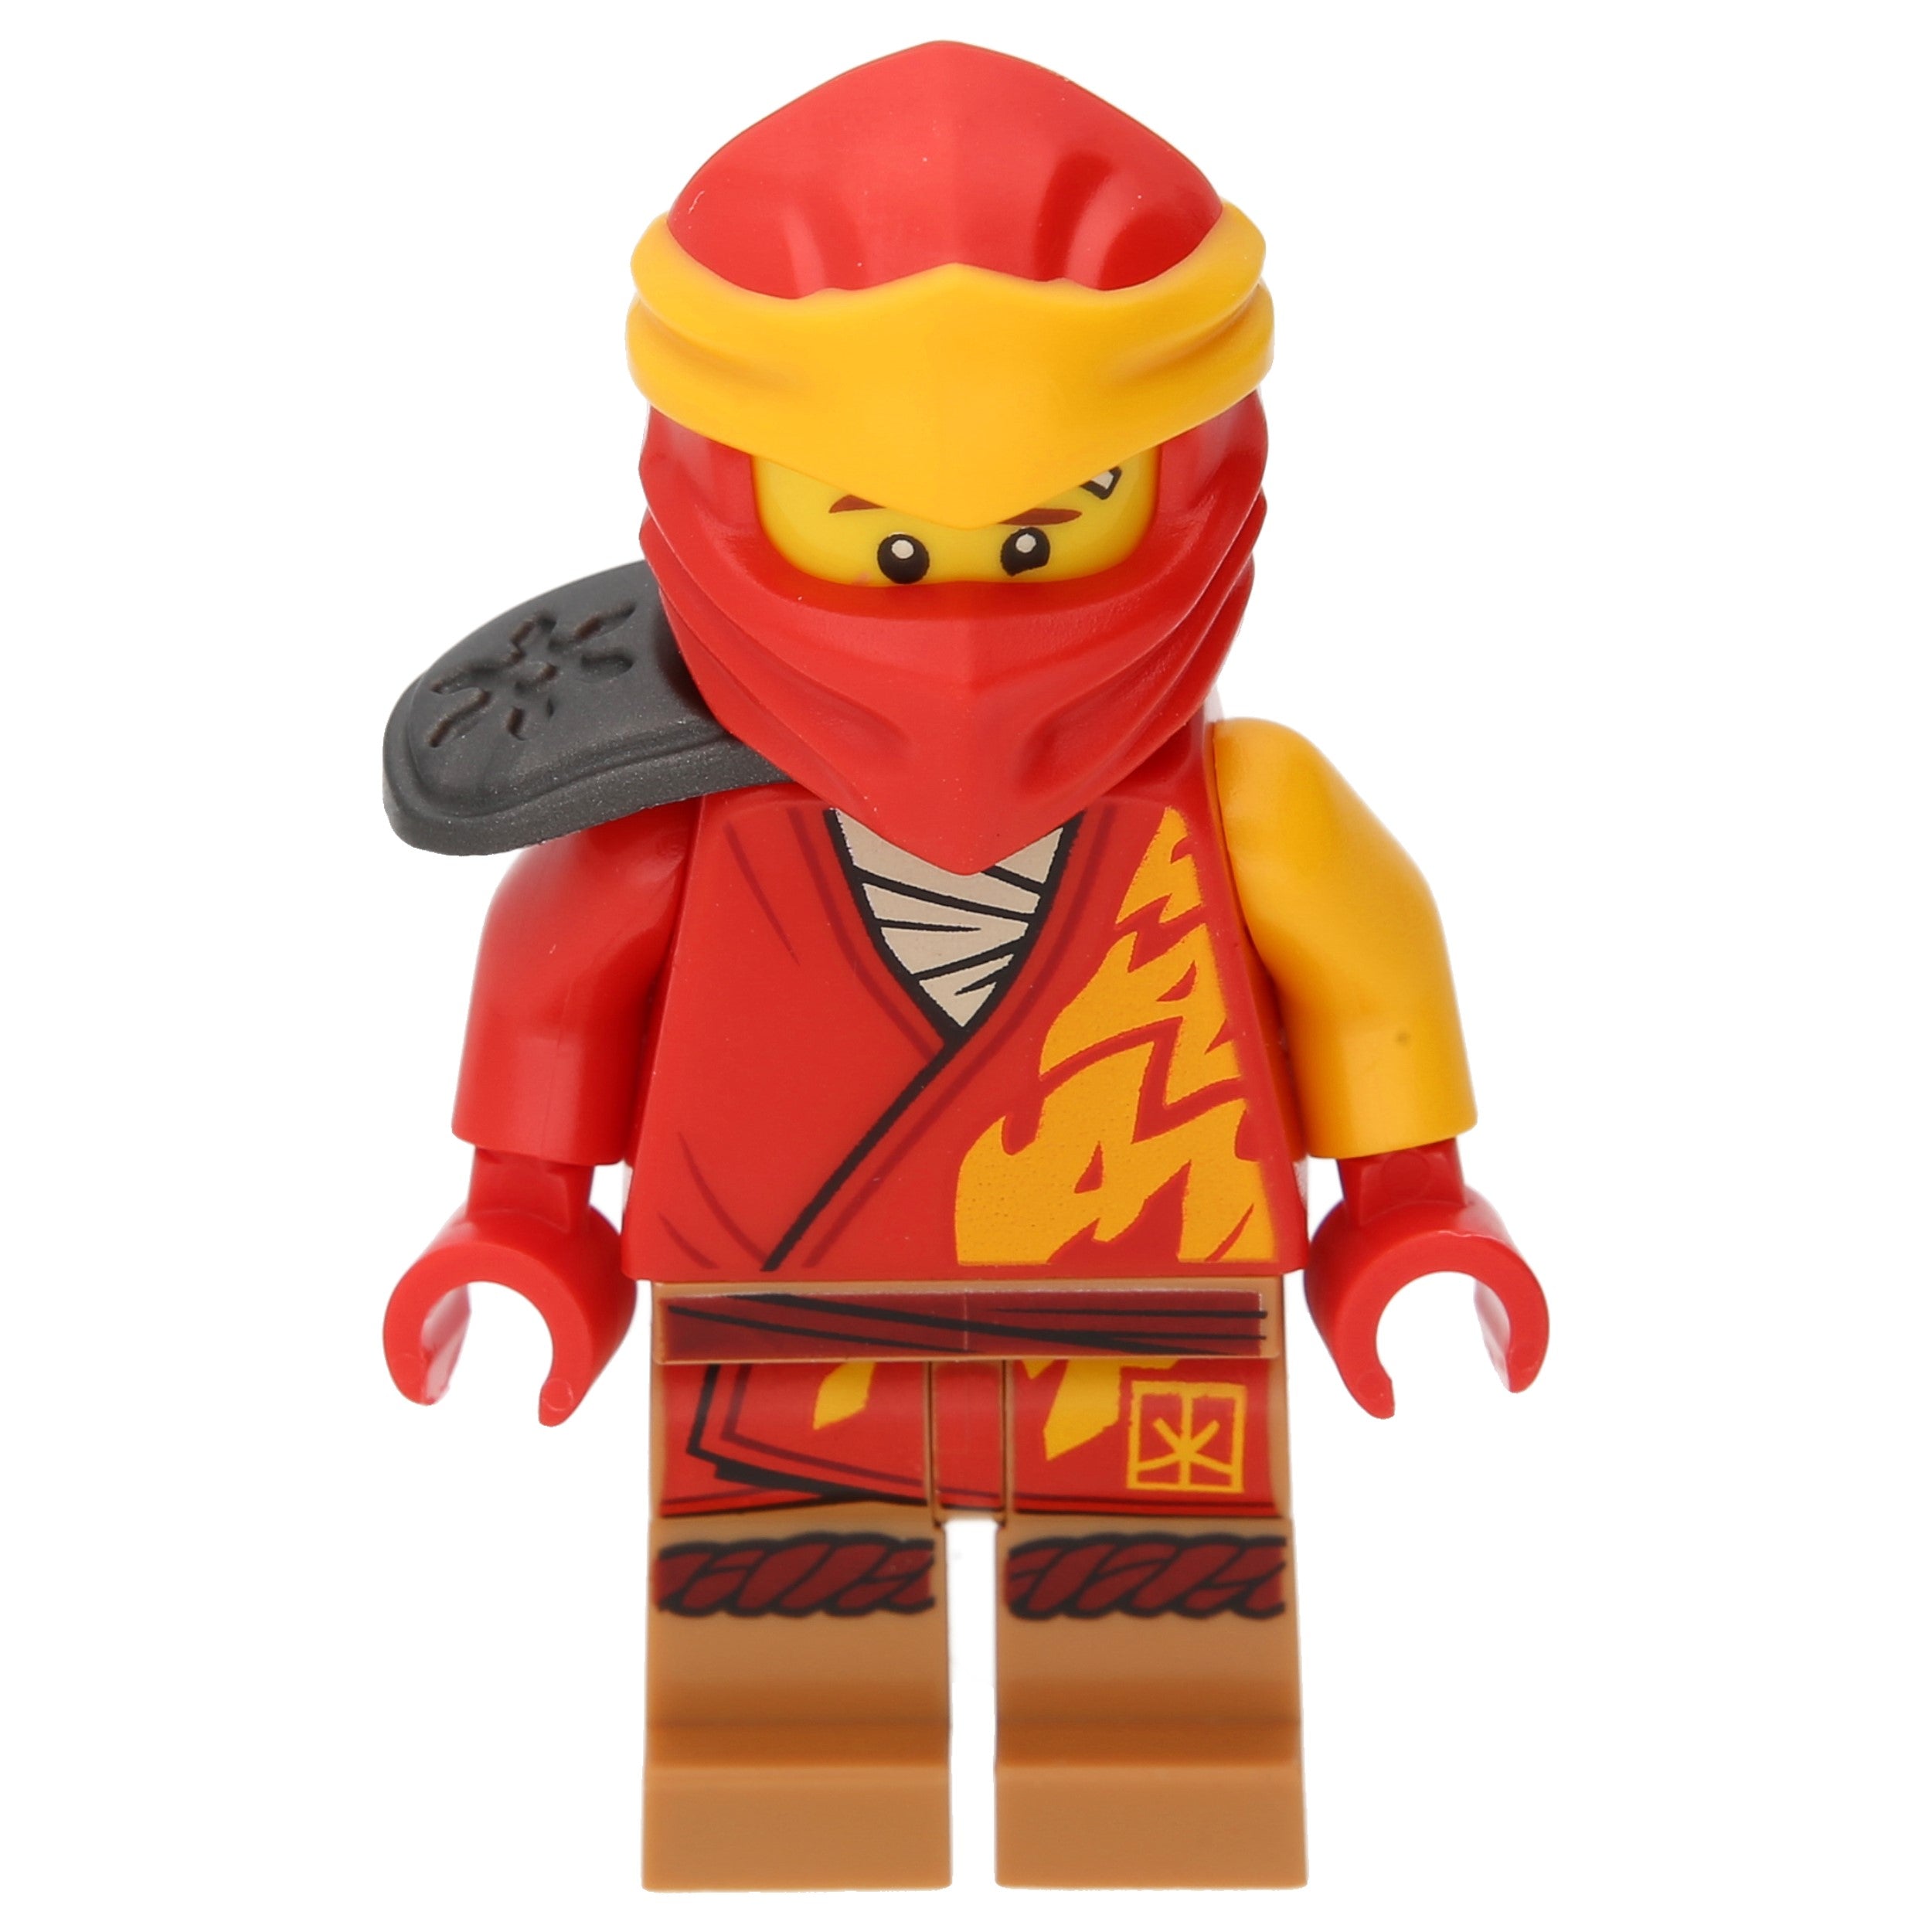 Lego Ninjago Minifigures - Kai with shoulder plate (core)